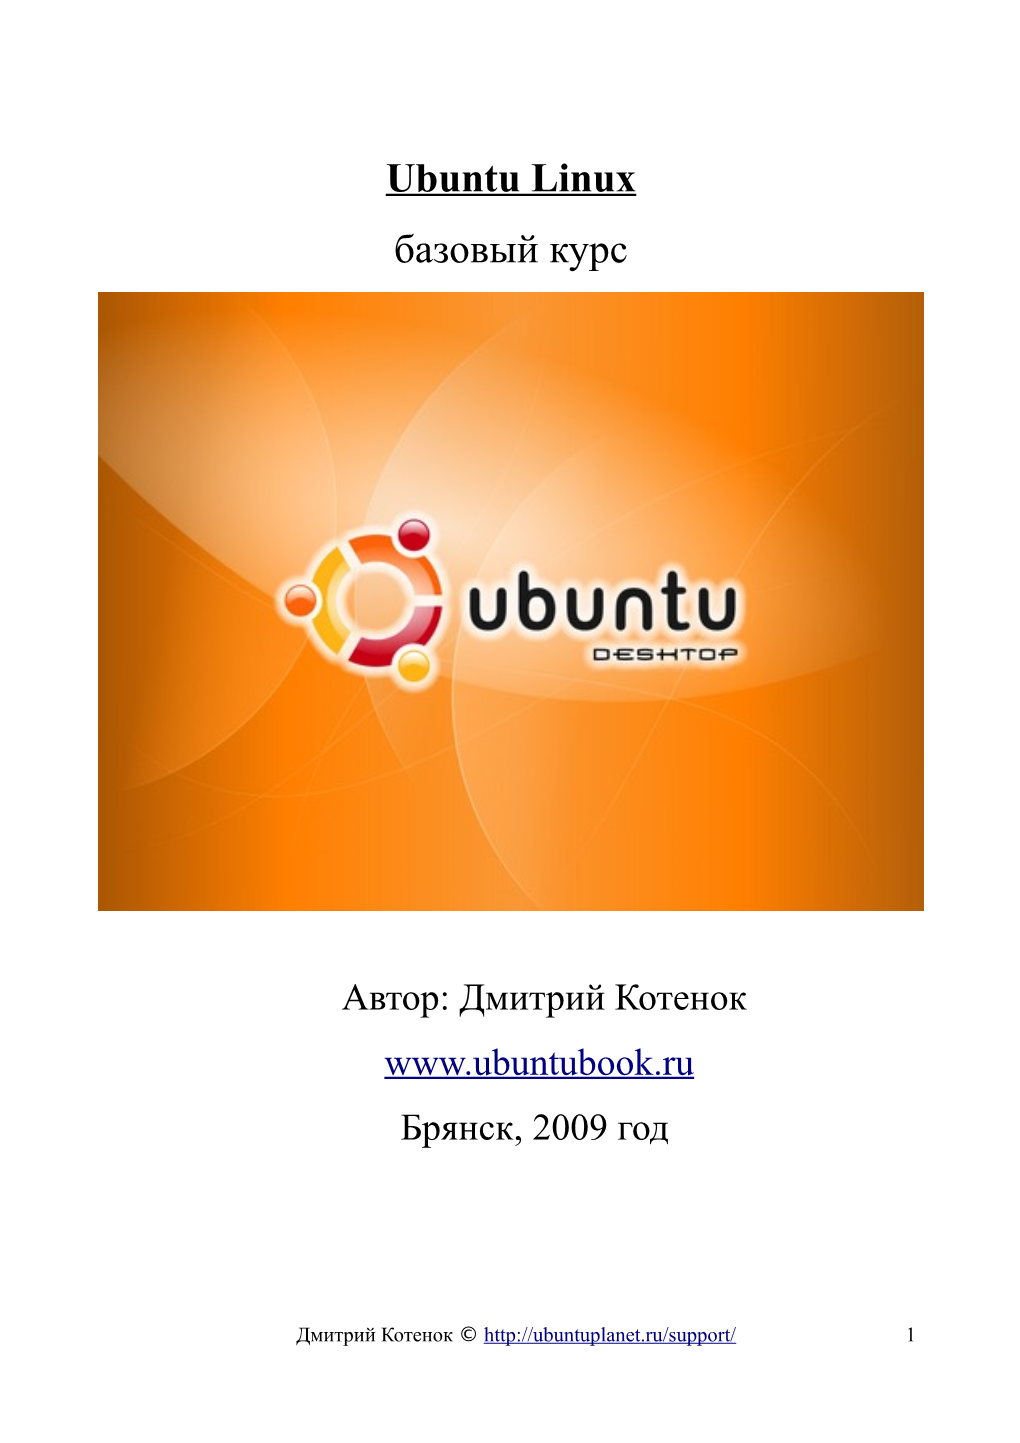 Ubuntu Linux Базовый Курс